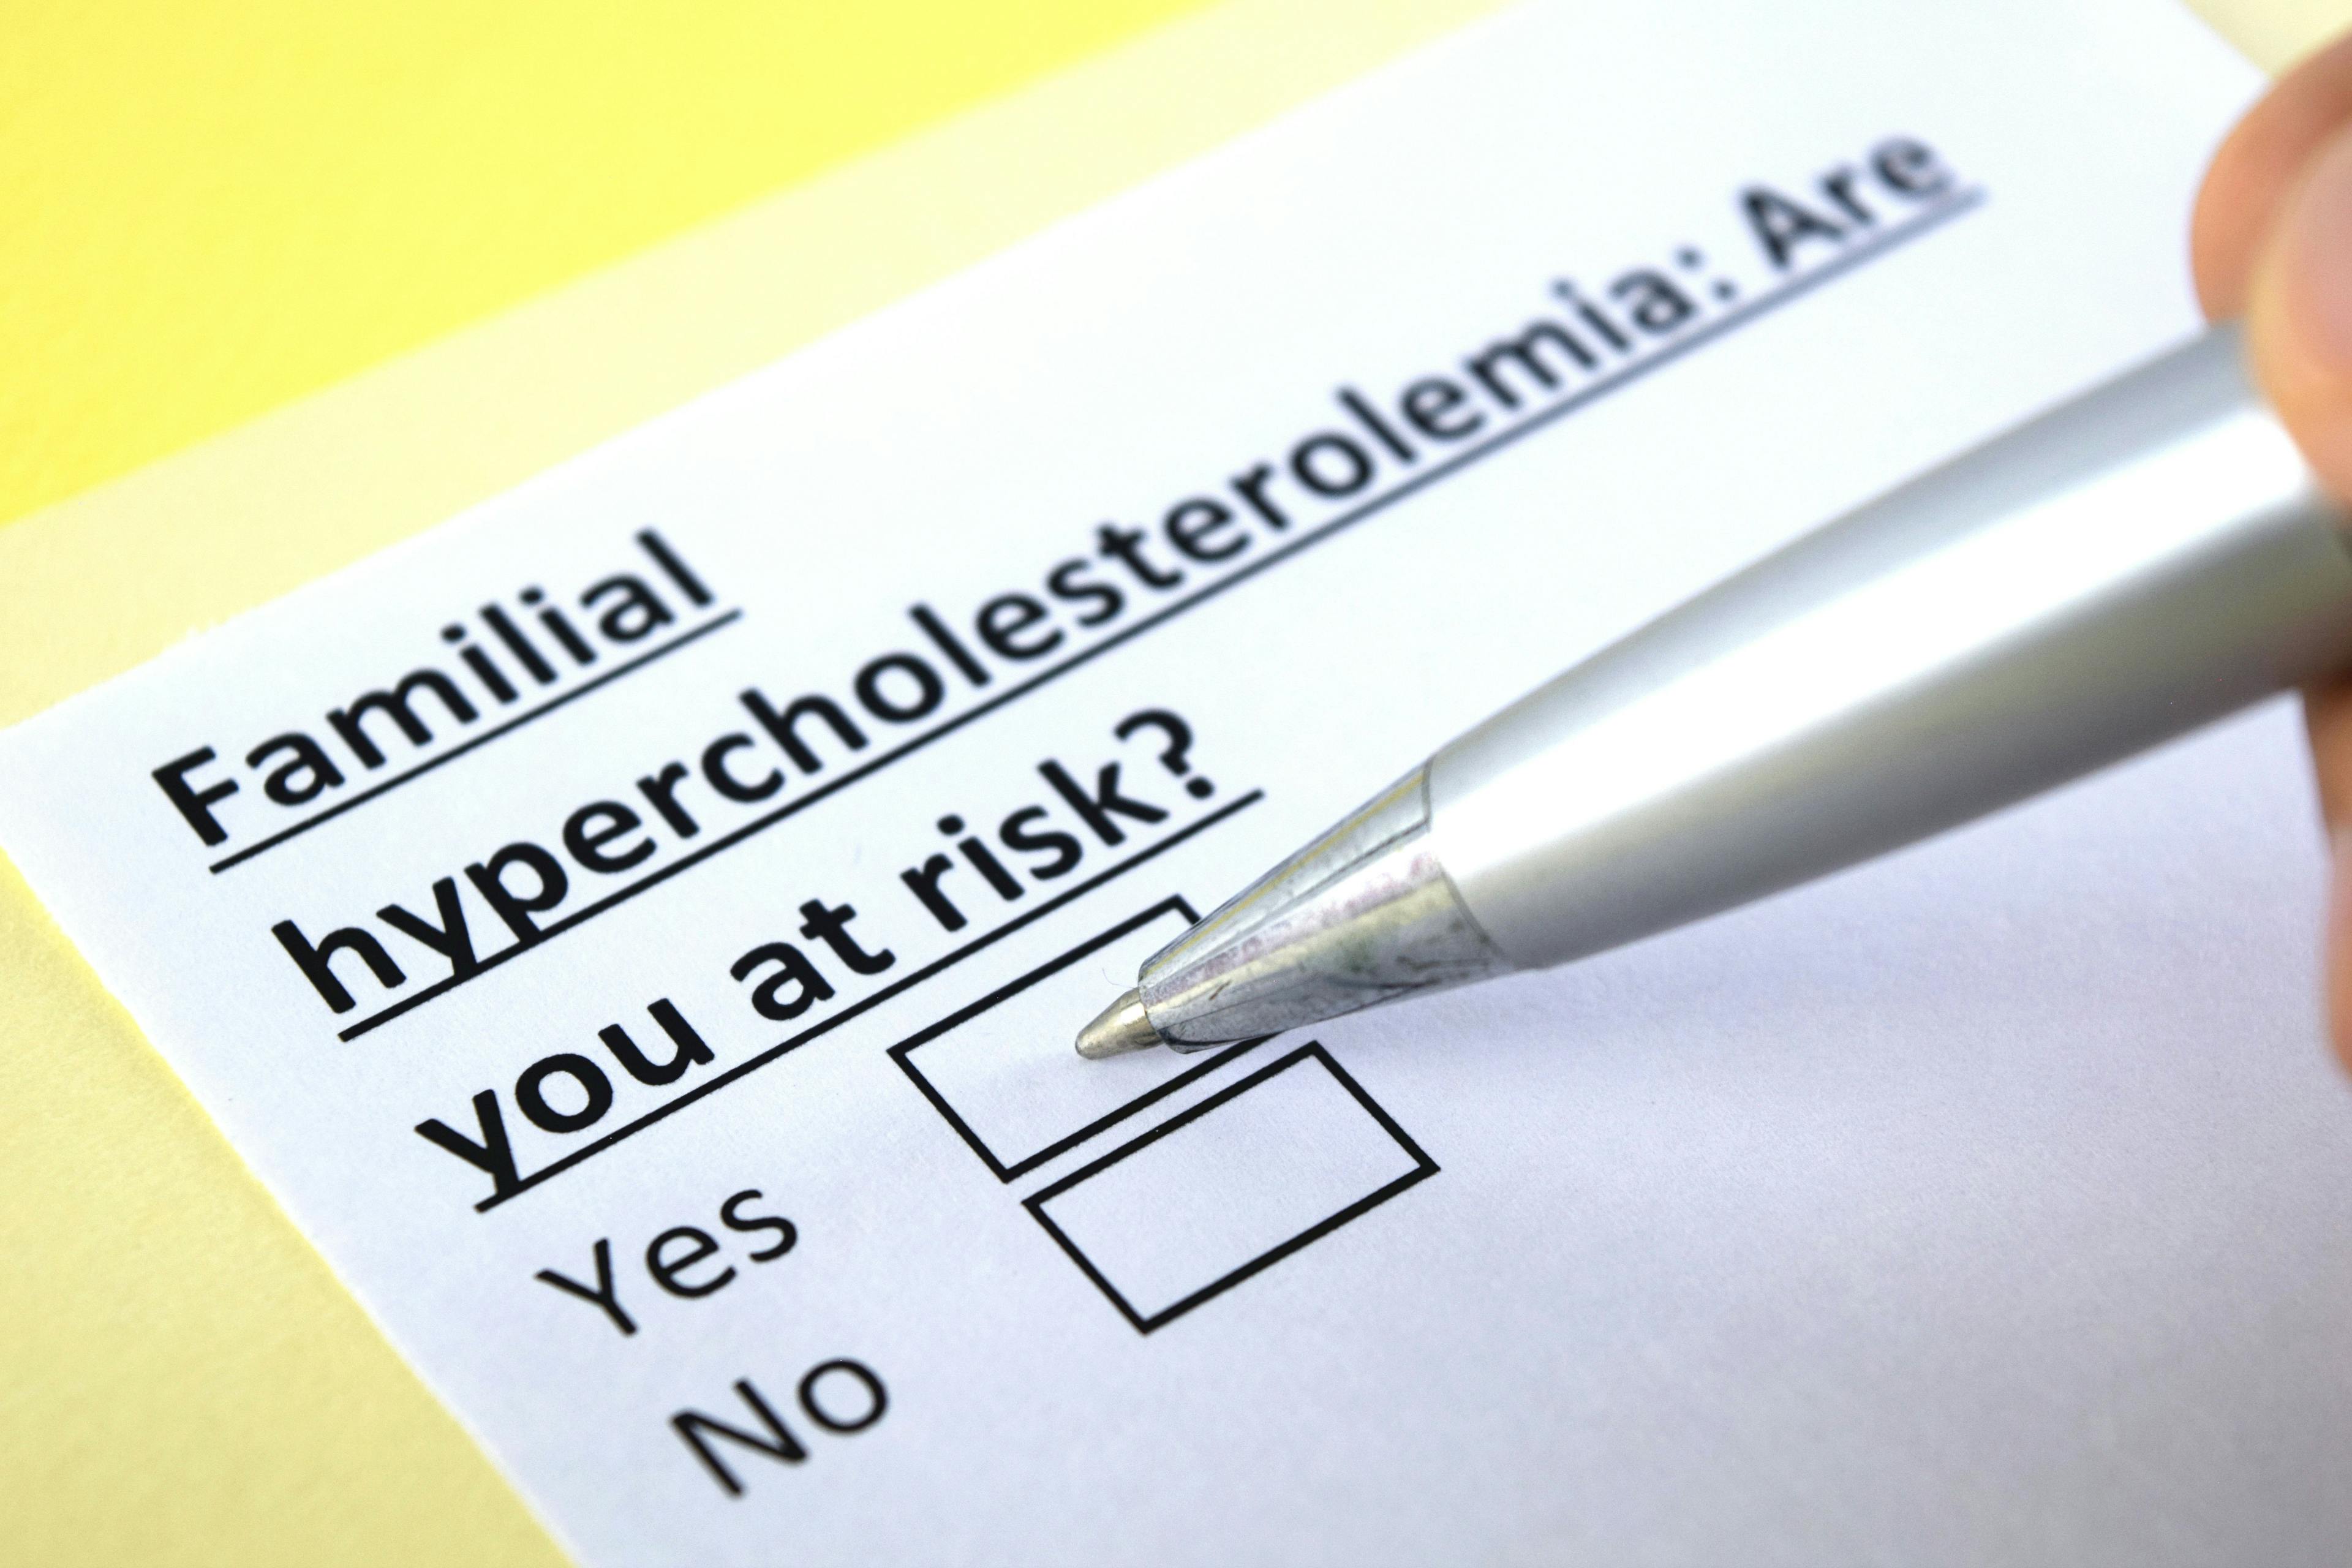 Familial hypercholesterolemia questionnaire | Image credit: Richelle – stock.adobe.com